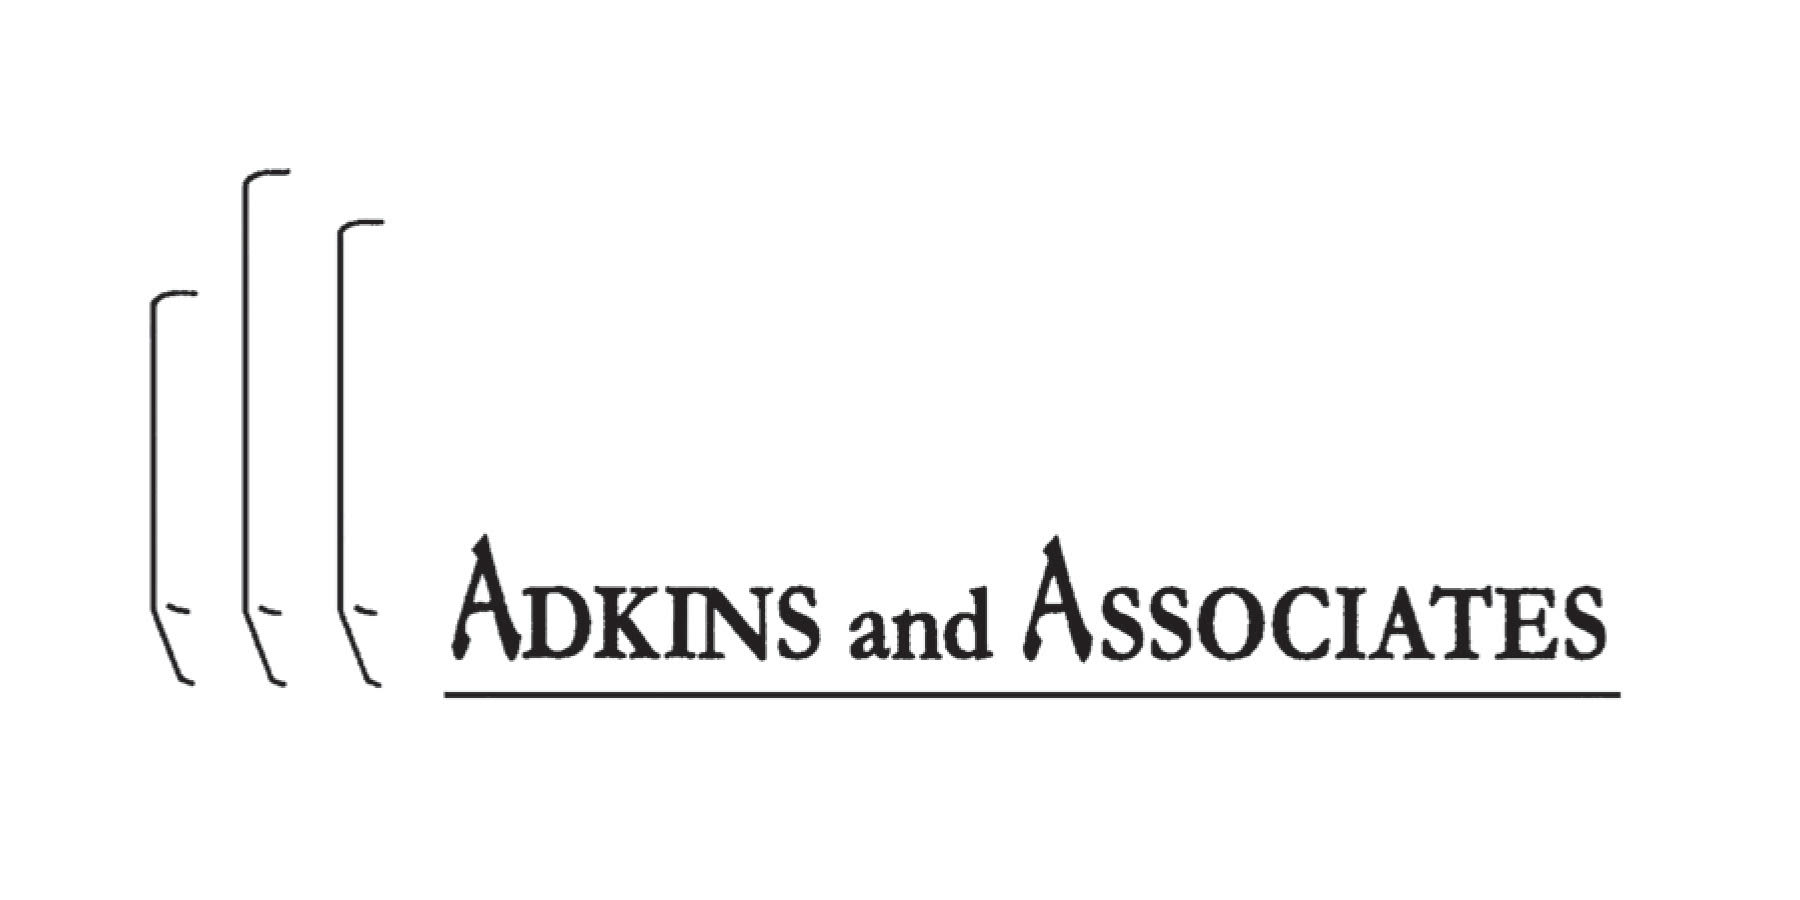 Adkins and Associates